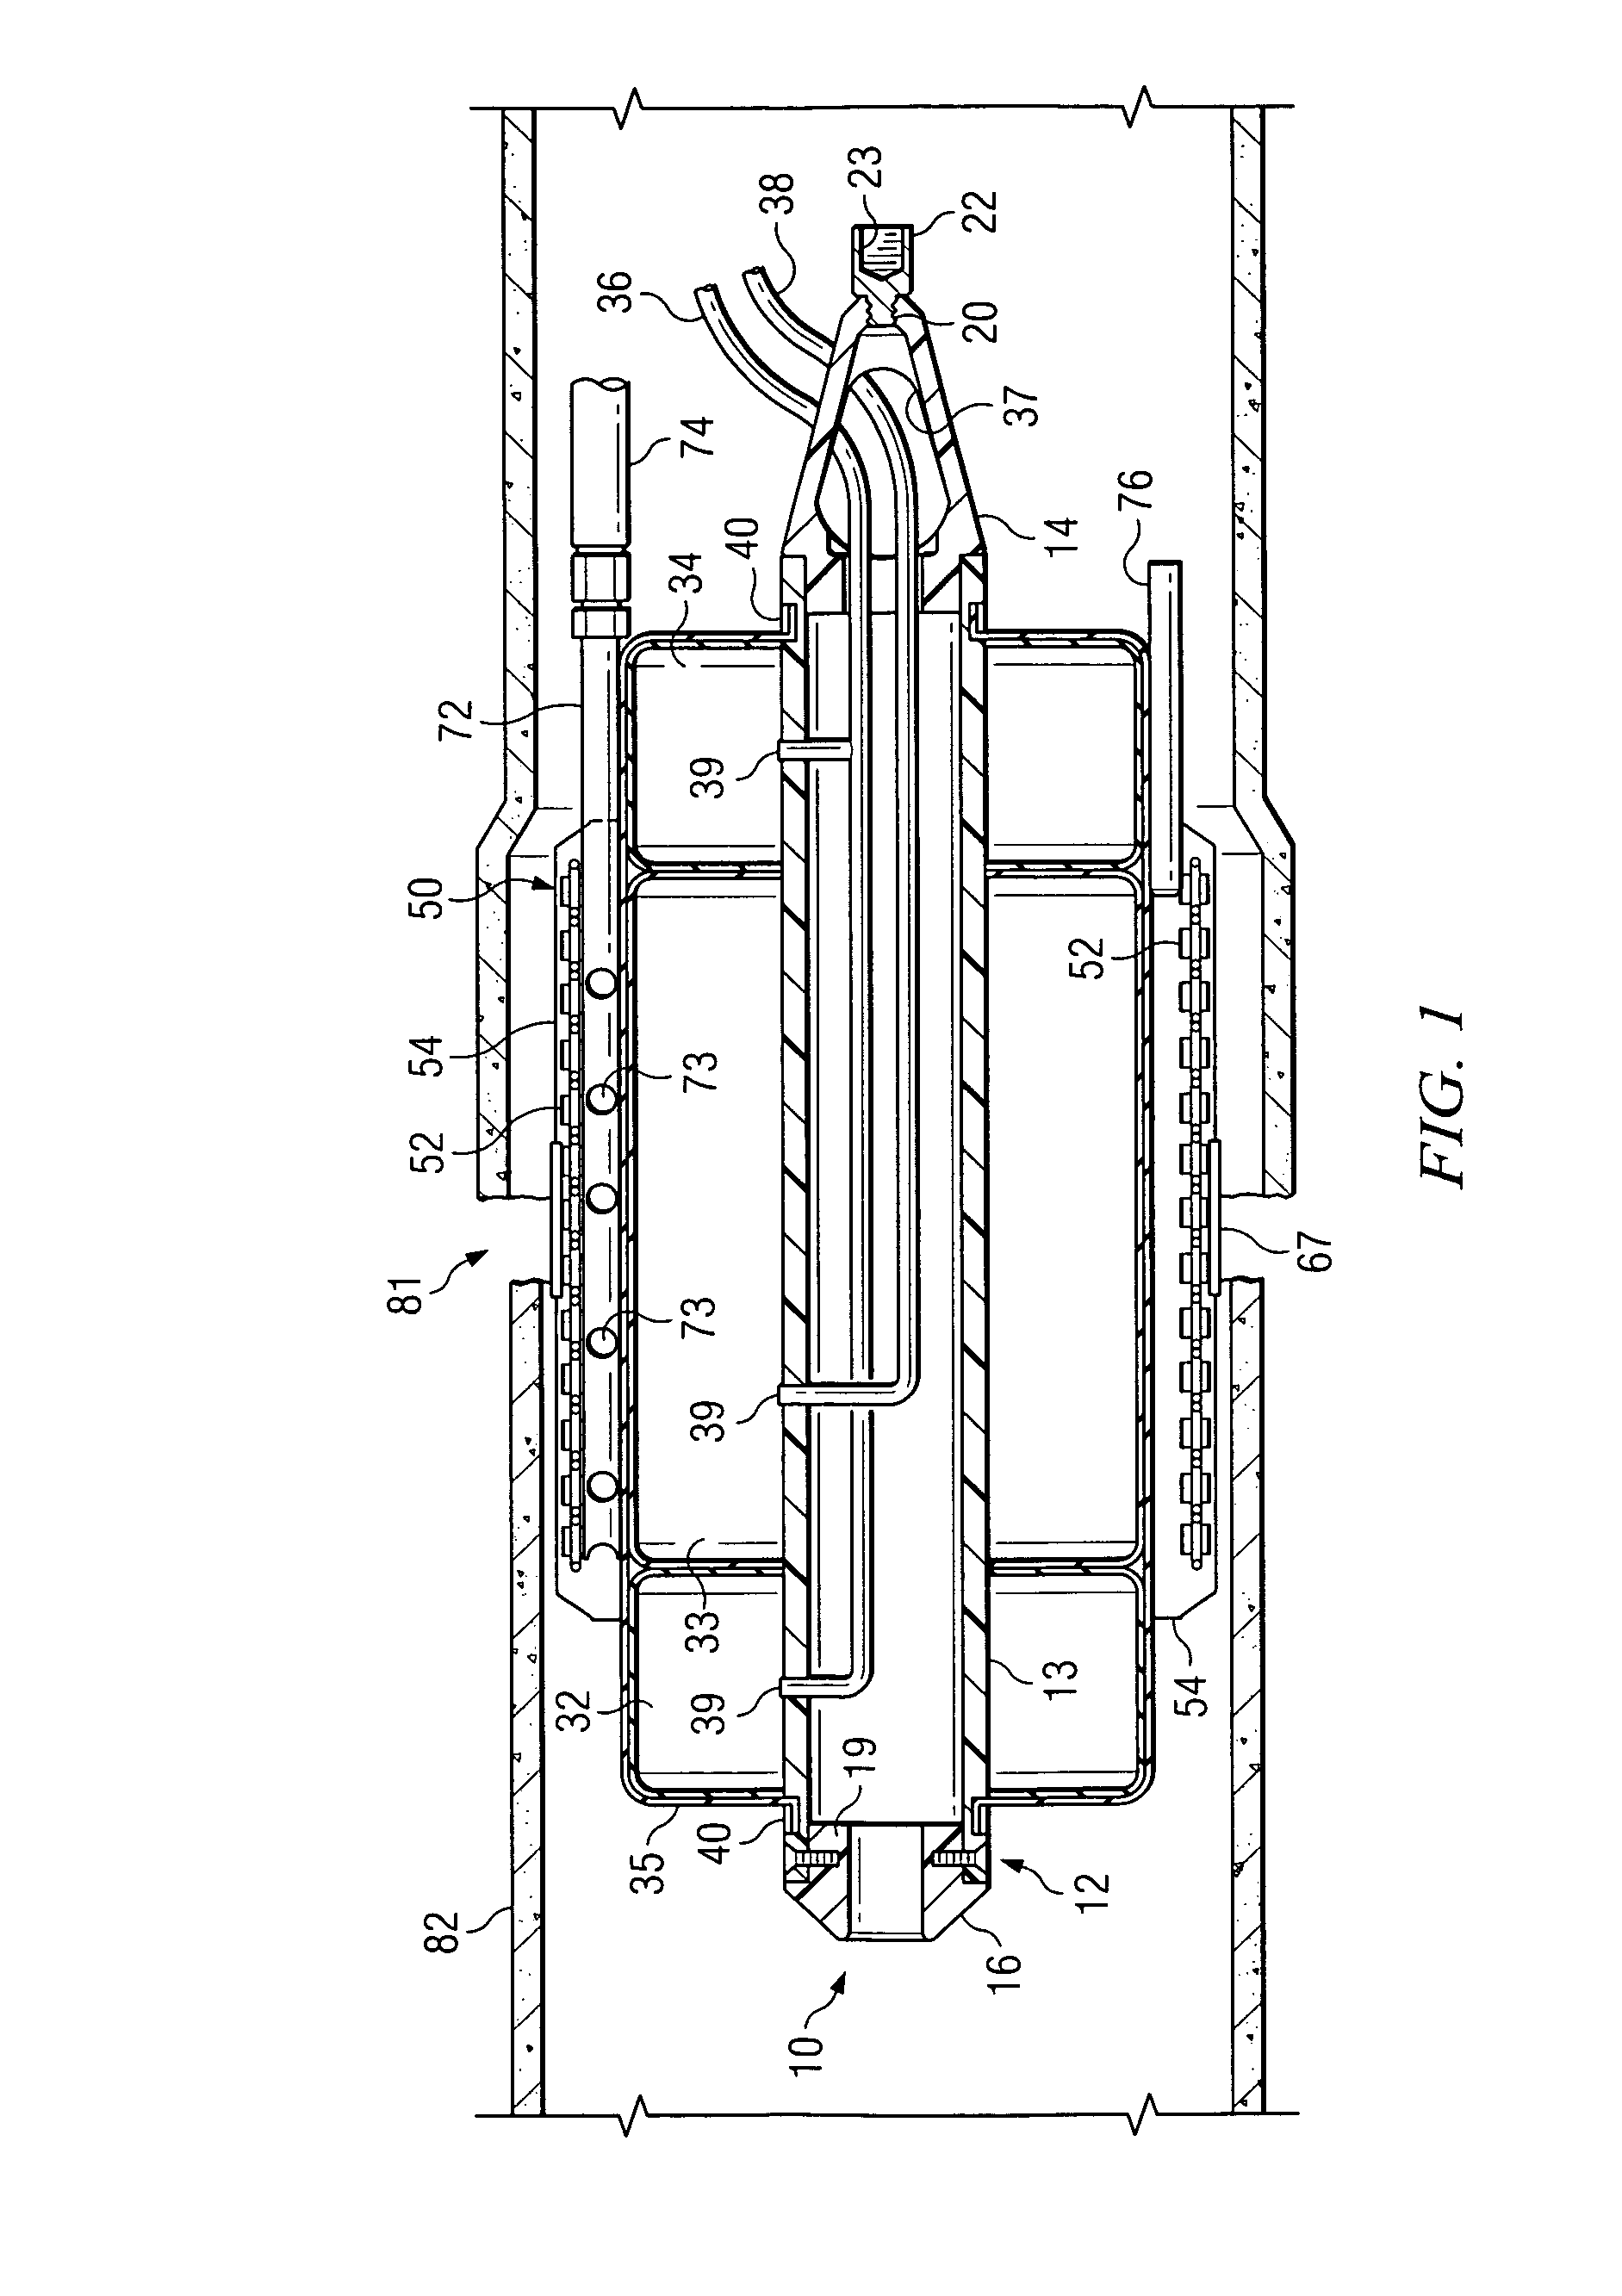 Method and apparatus for repairing underground pipes